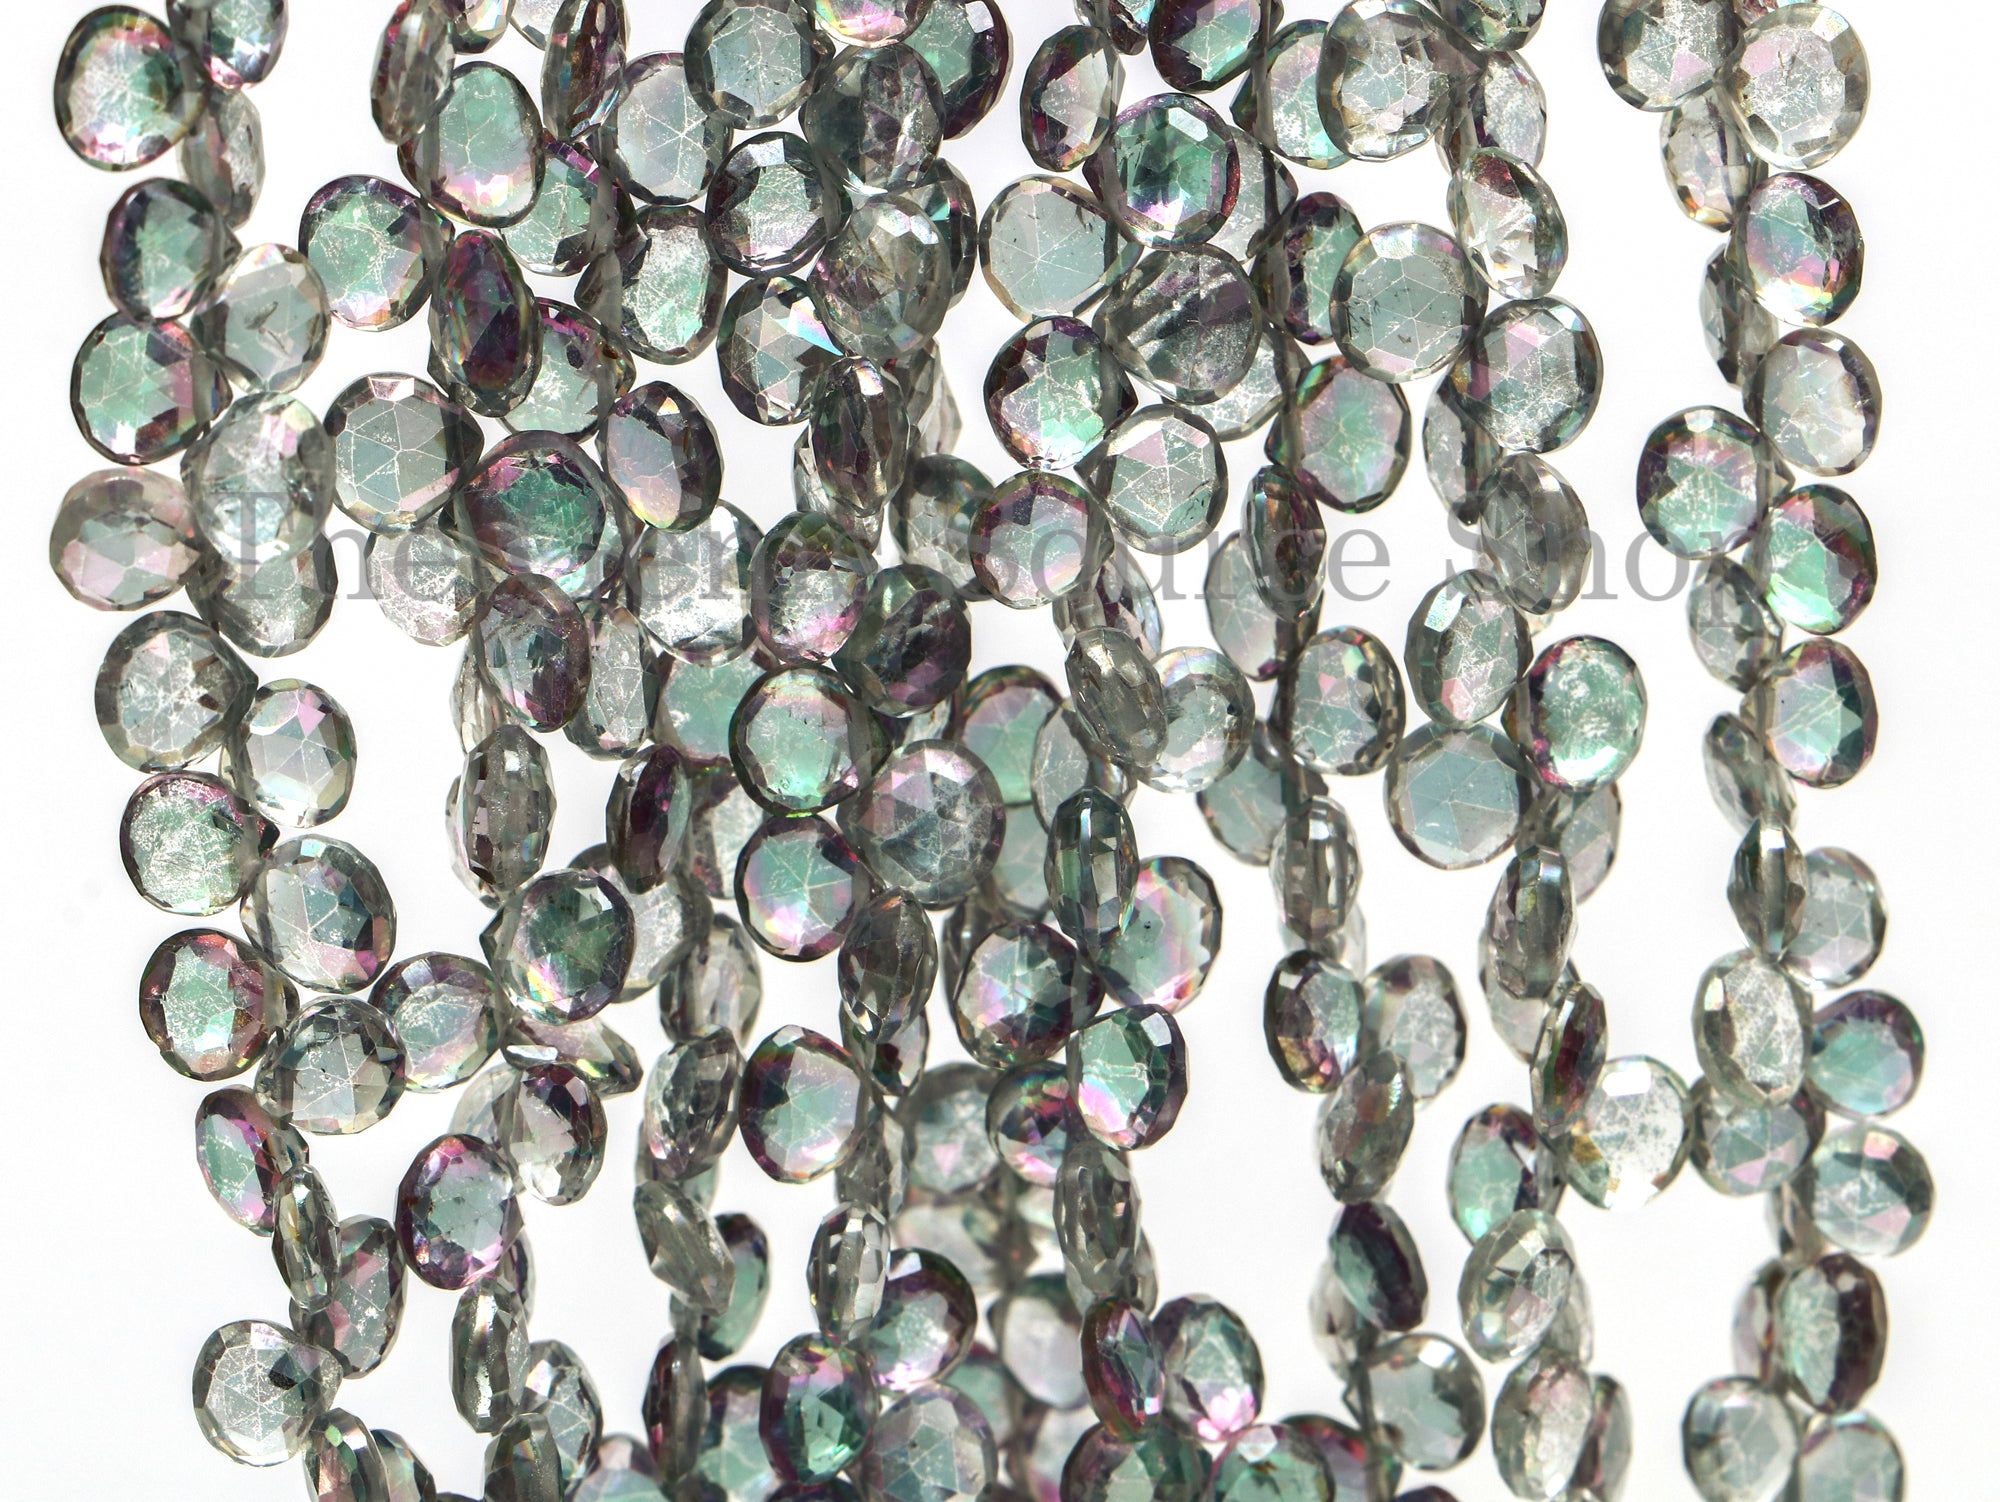 Mystic Topaz Beads, Mystic Topaz Heart Shape Beads, Mystic Topaz Faceted Beads, Mystic Topaz Gemstone Beads